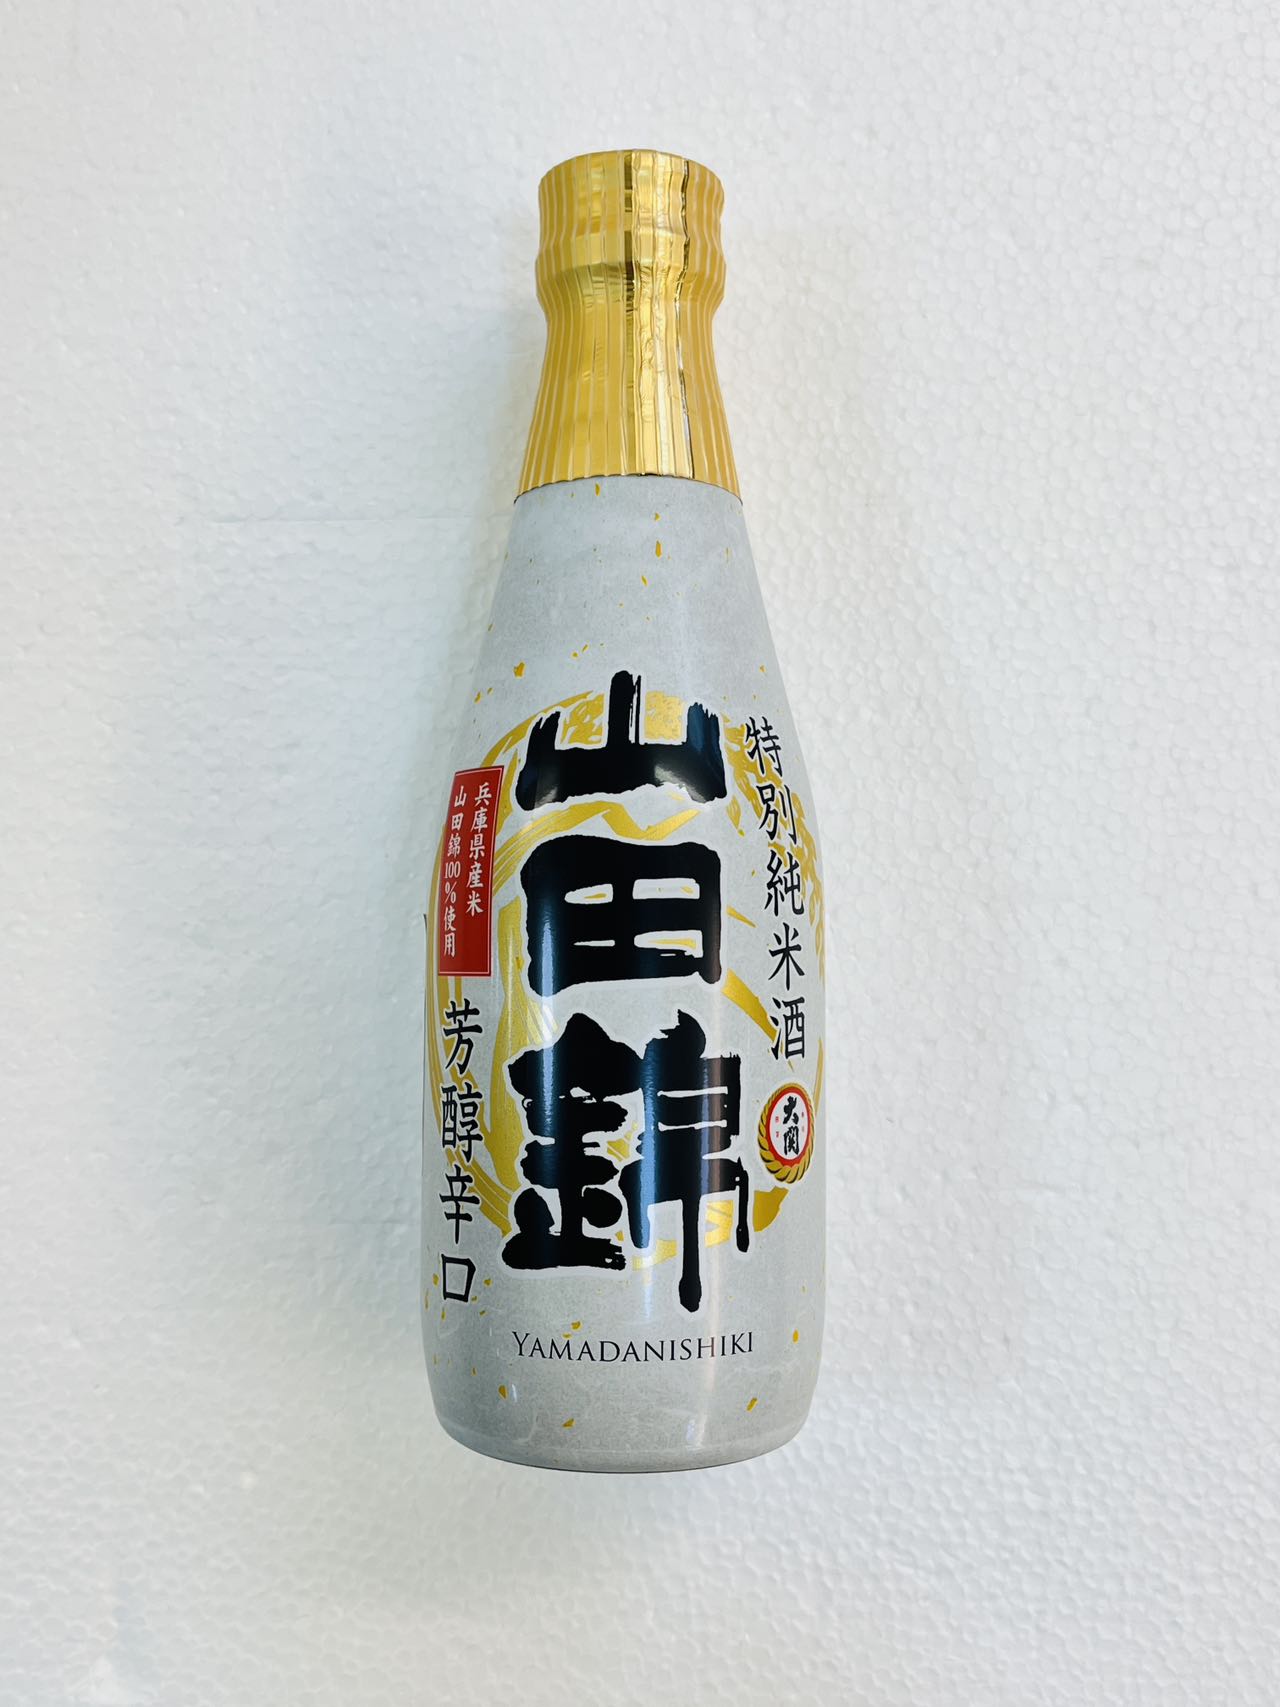 OZEKI Tokubetsu Junmai Yamada Nishiki 大关 山田锦 特别纯米酒 14.8% 300ml